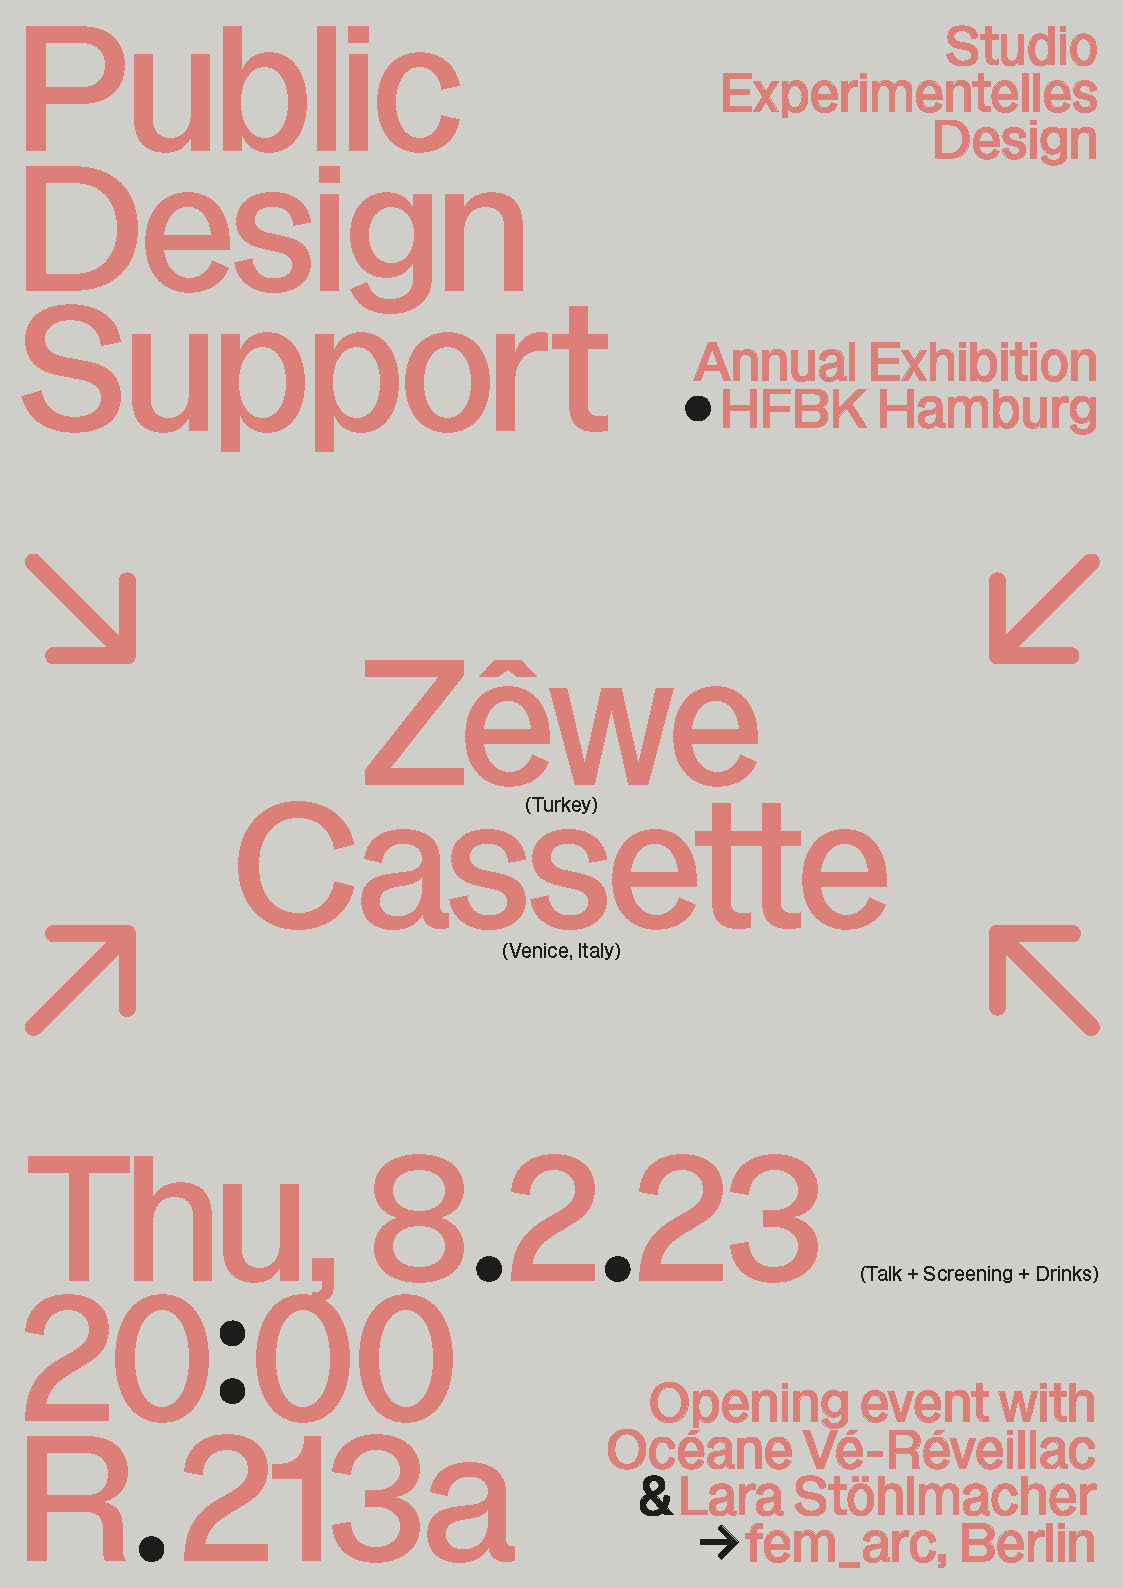 Studio Experimental Design: Public Design Support Zêwe (Turkey) / Cassette (Italy)